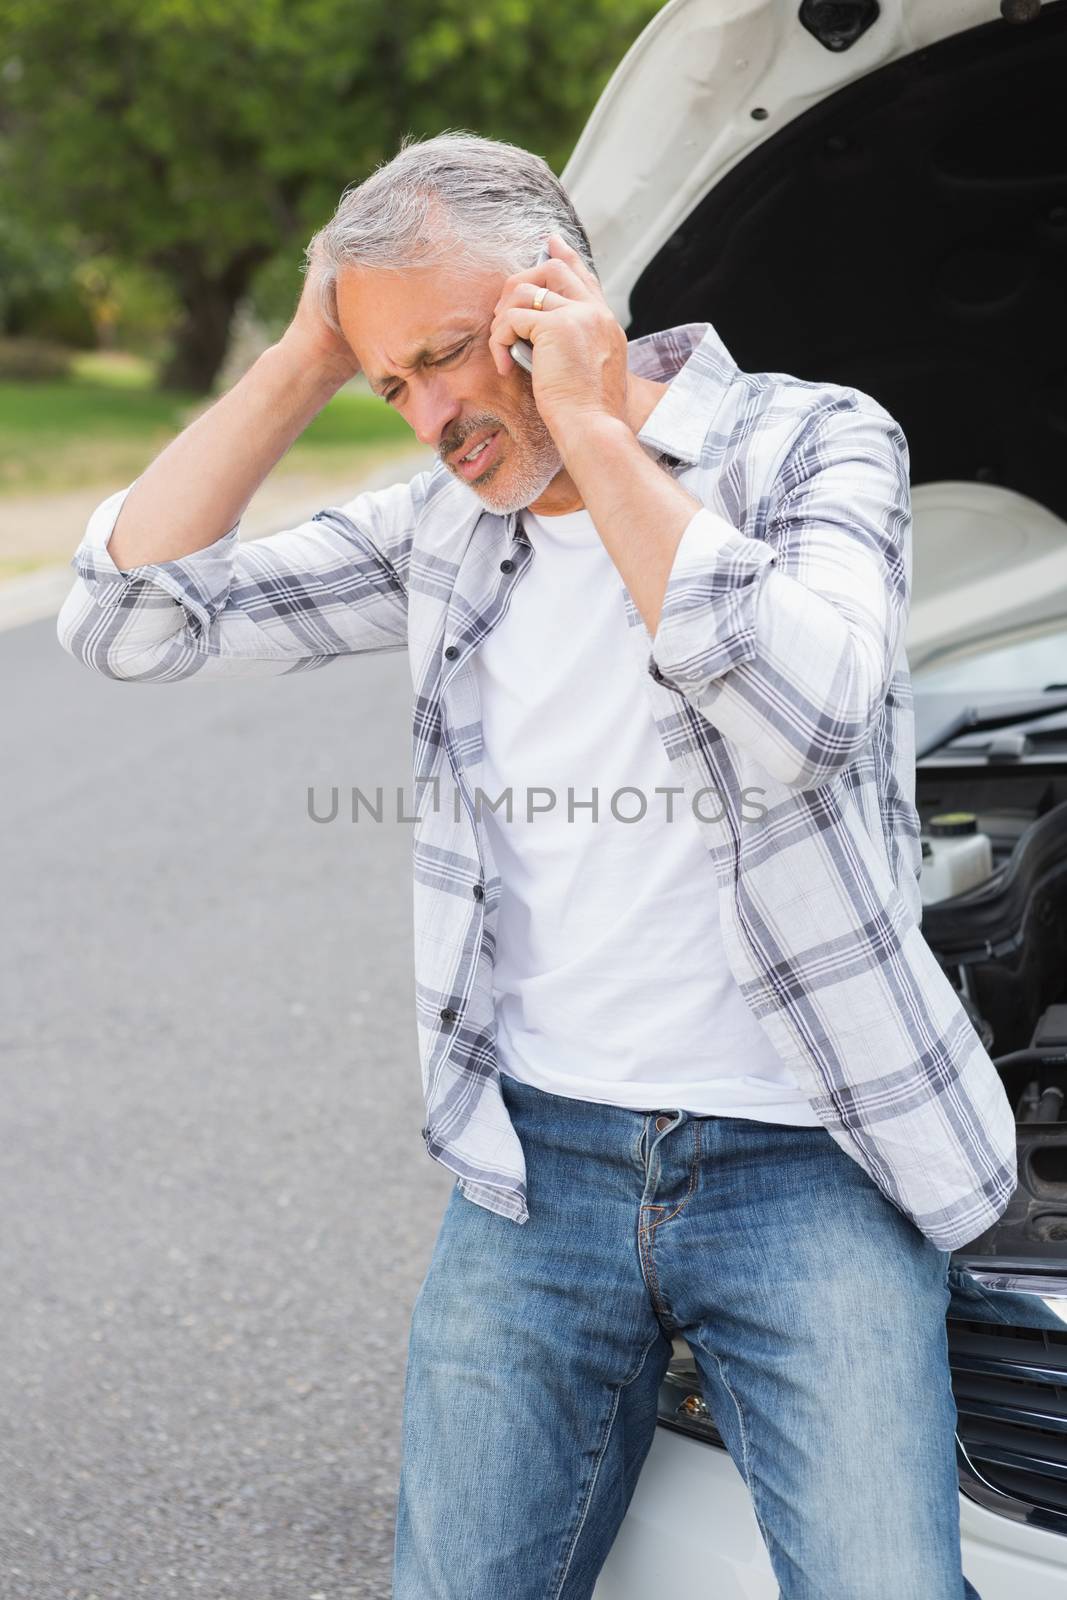 Stressed man calling beside his broken down car 